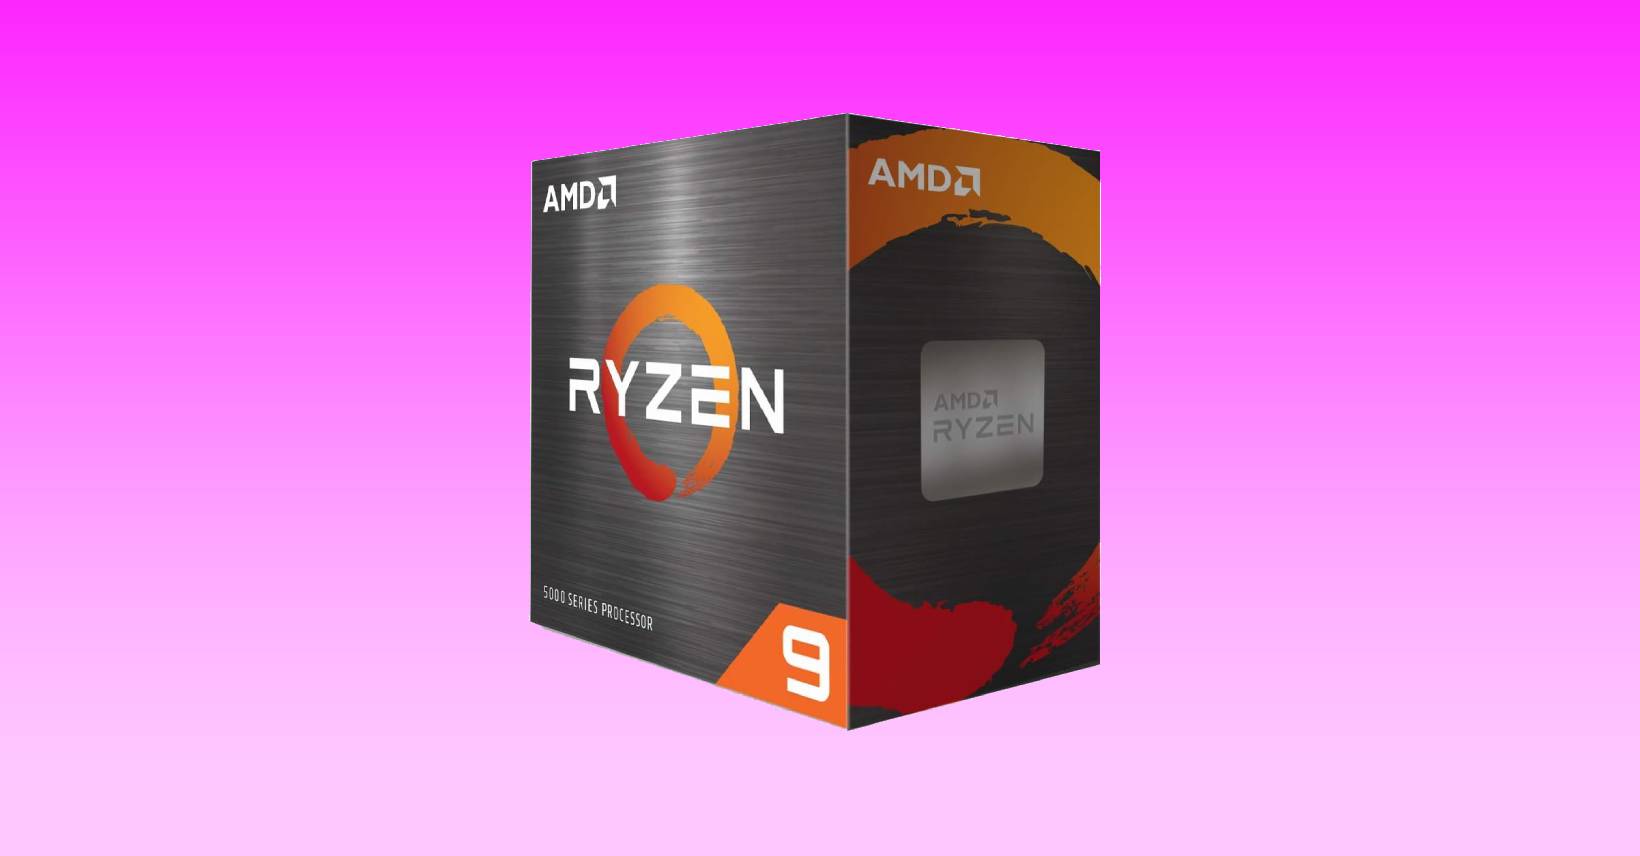 Quality processor gets huge price cut! AMD Ryzen 9 5900X CPU deal